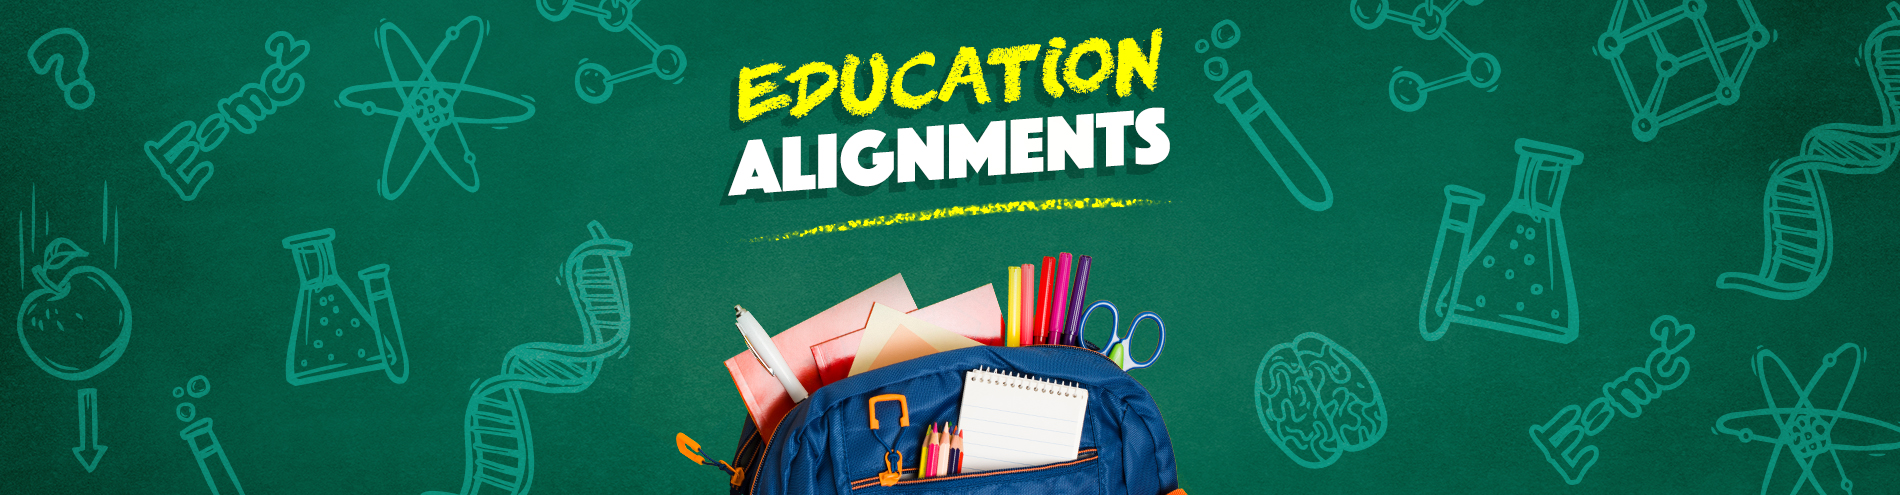 Education Alignments Header